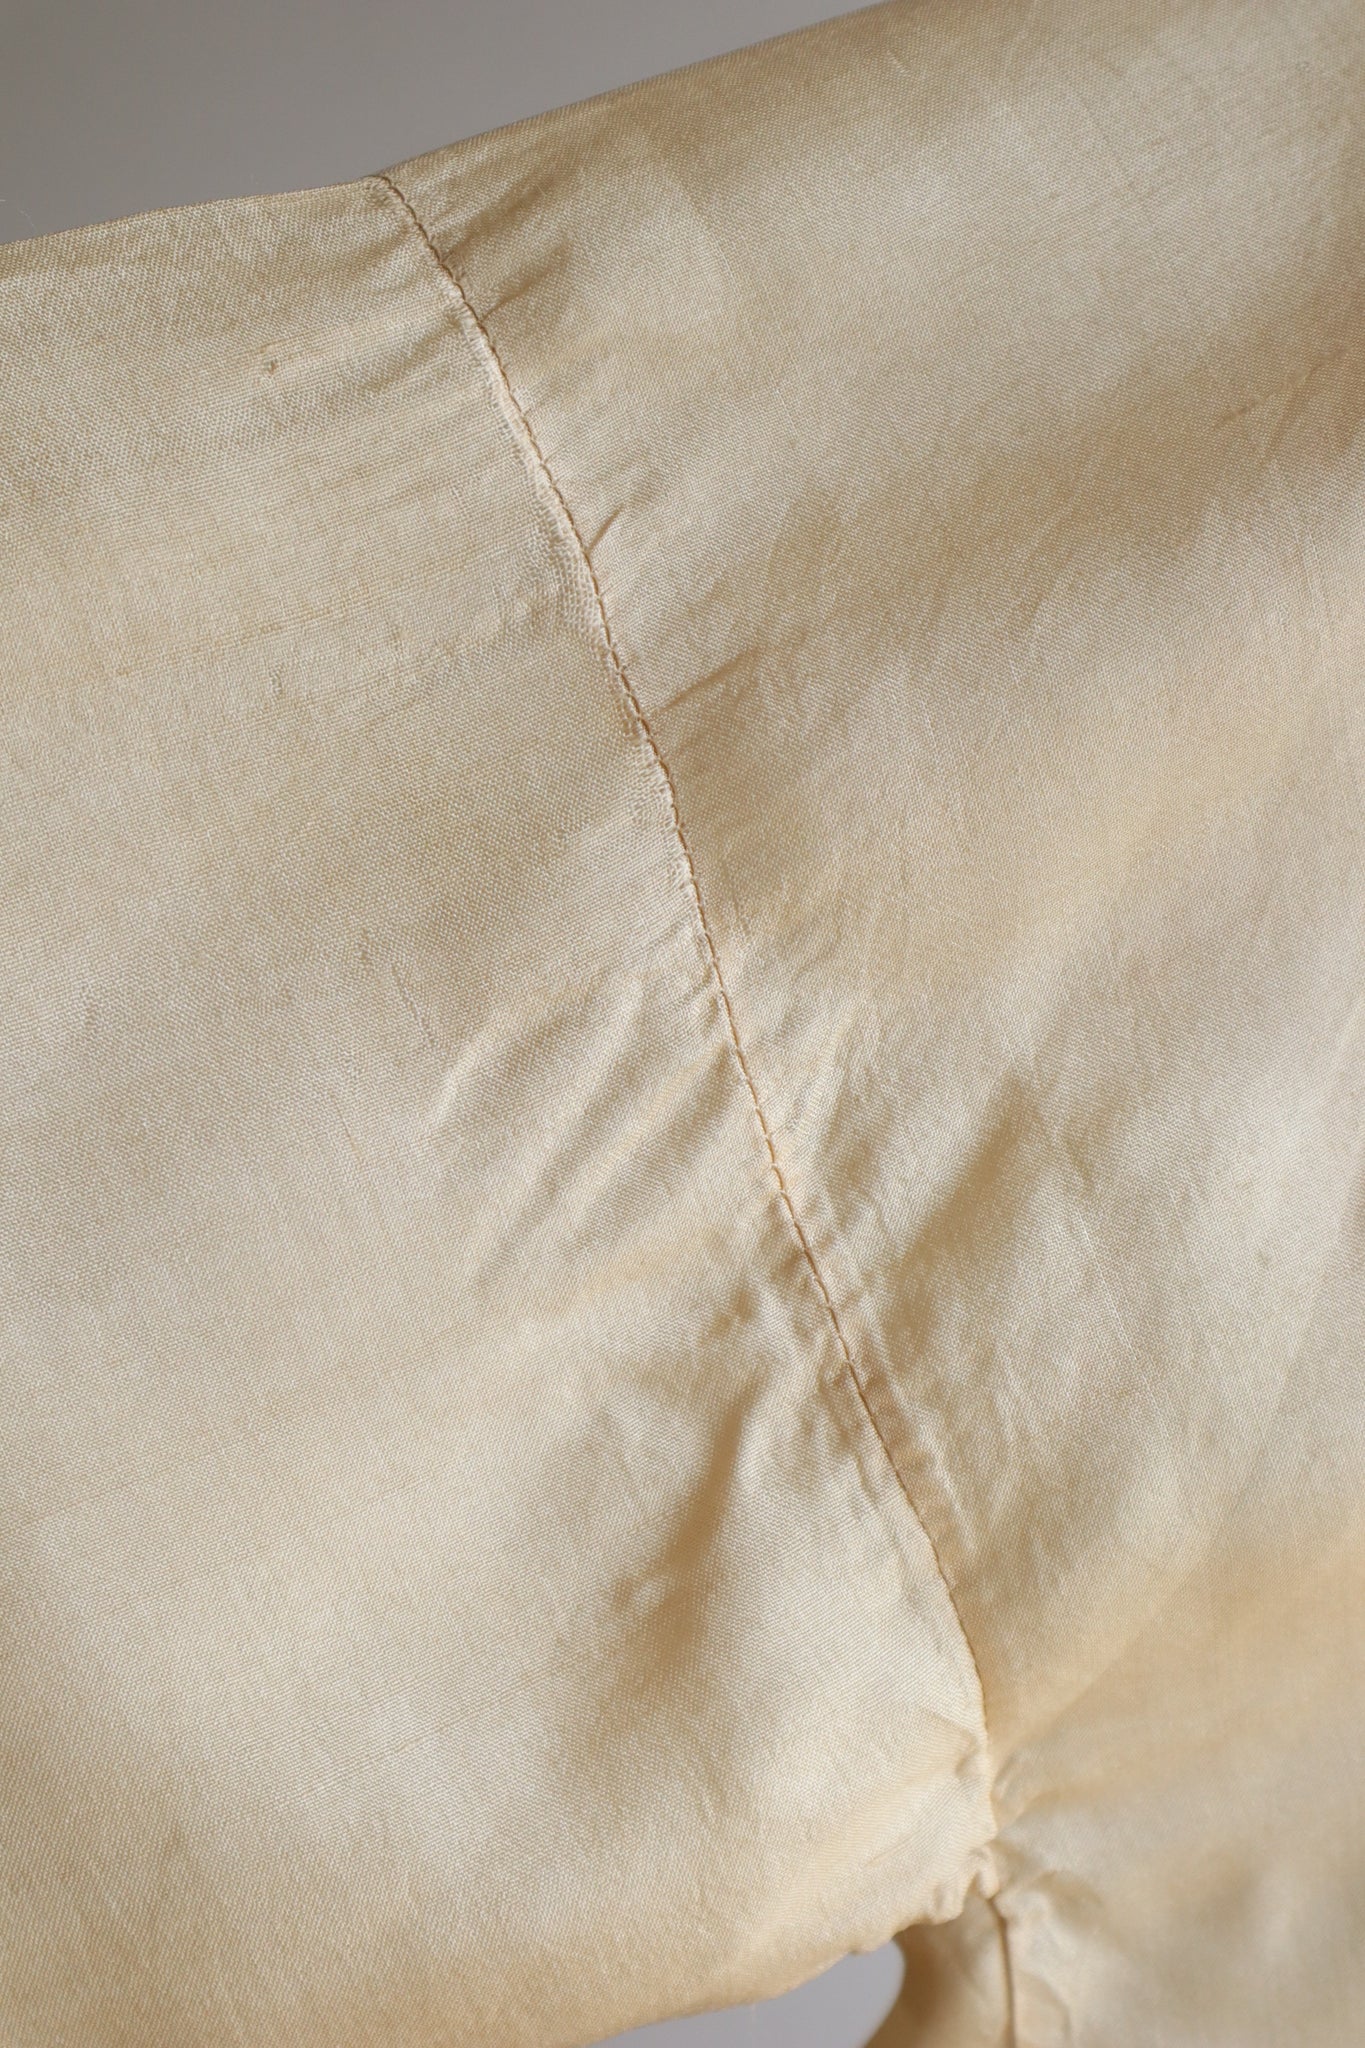 1920s Pongee Silk Robe